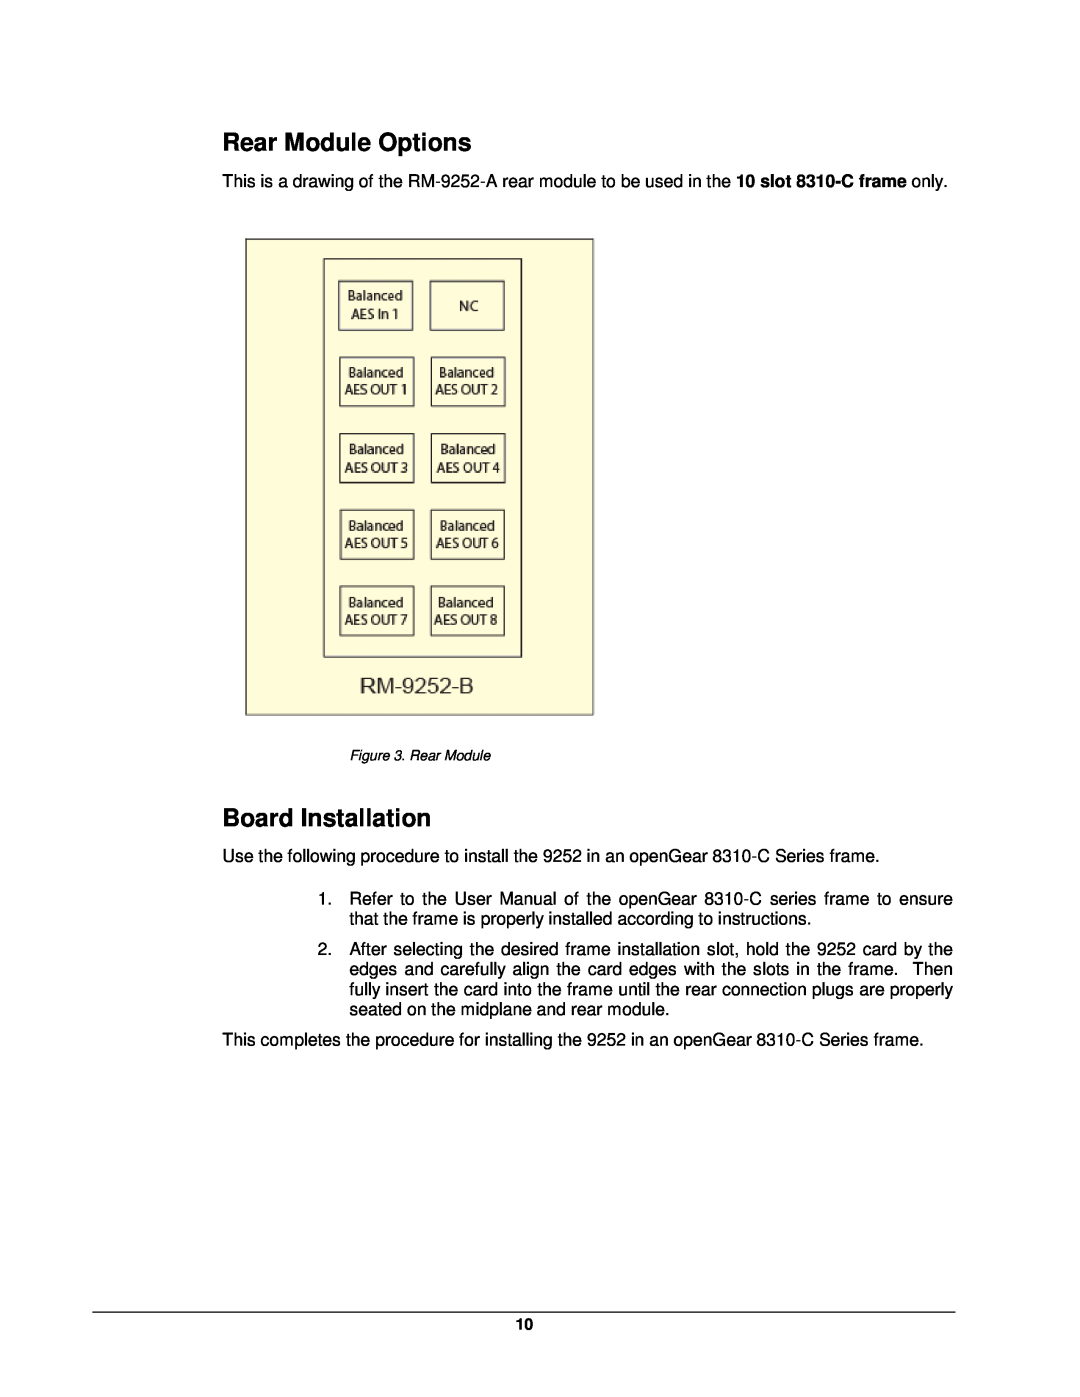 Cobalt Networks 9252 user manual Rear Module Options, Board Installation 